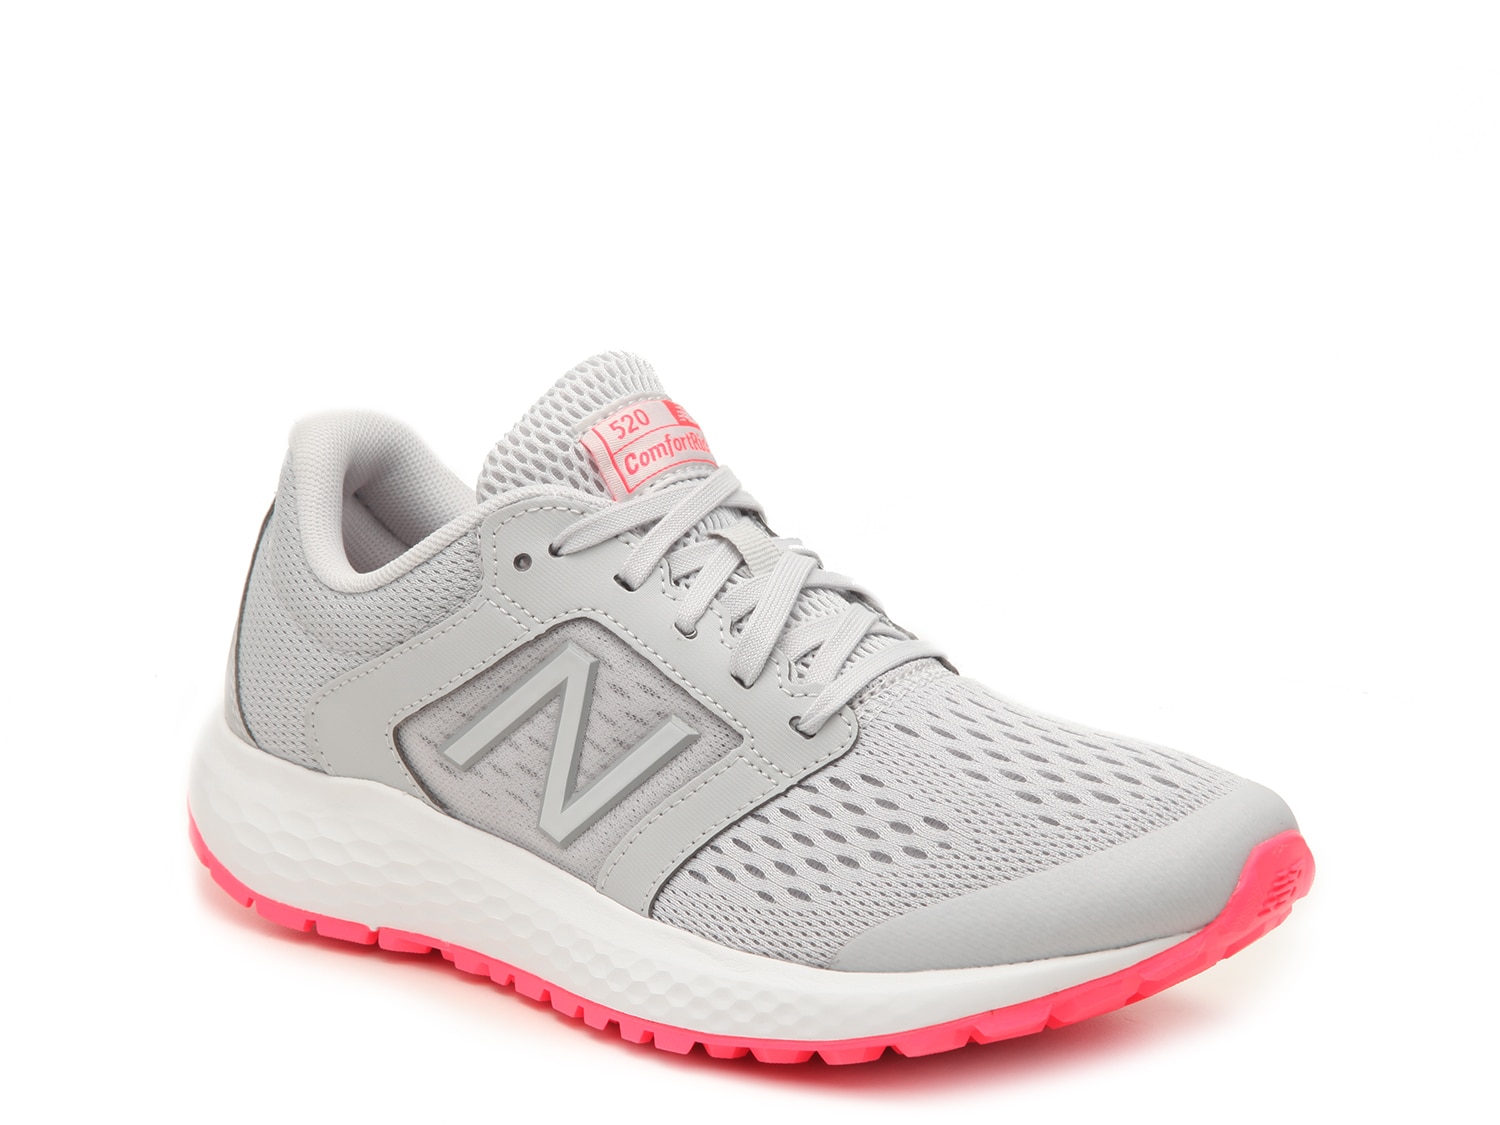 NB 520 V6 ComfortRide Training Shoes 